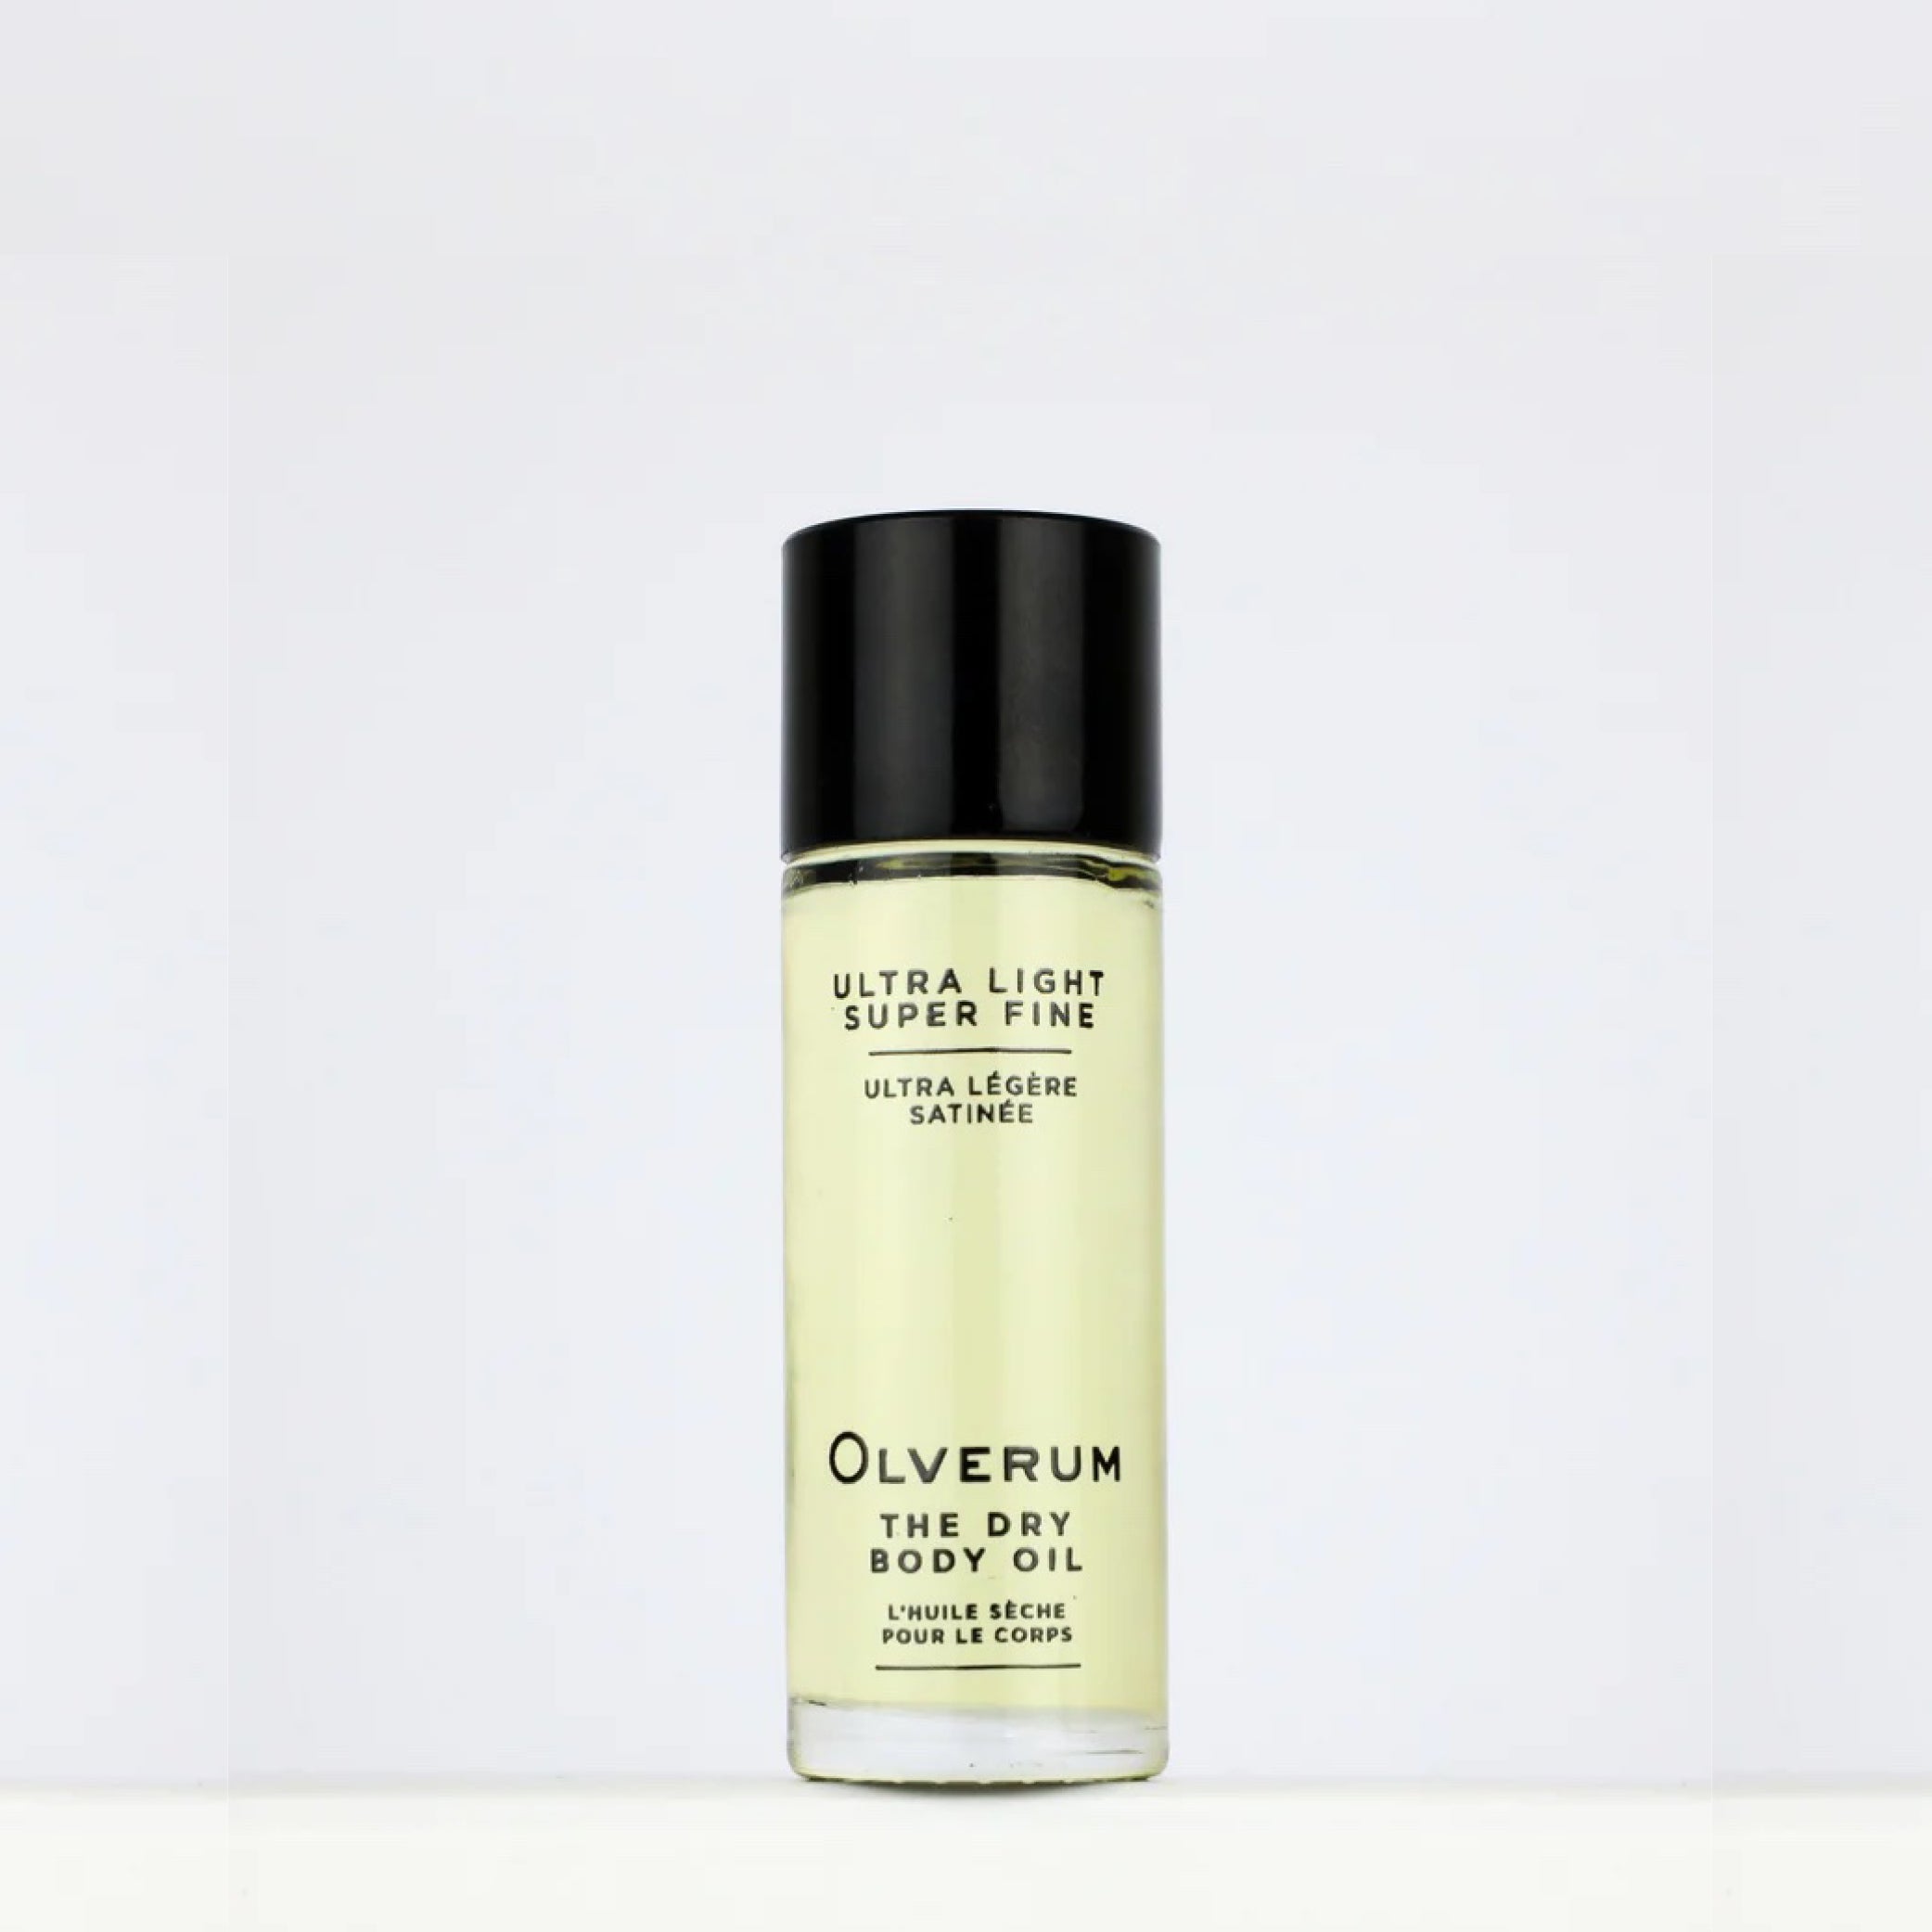 Olverum The Dry Body Oil